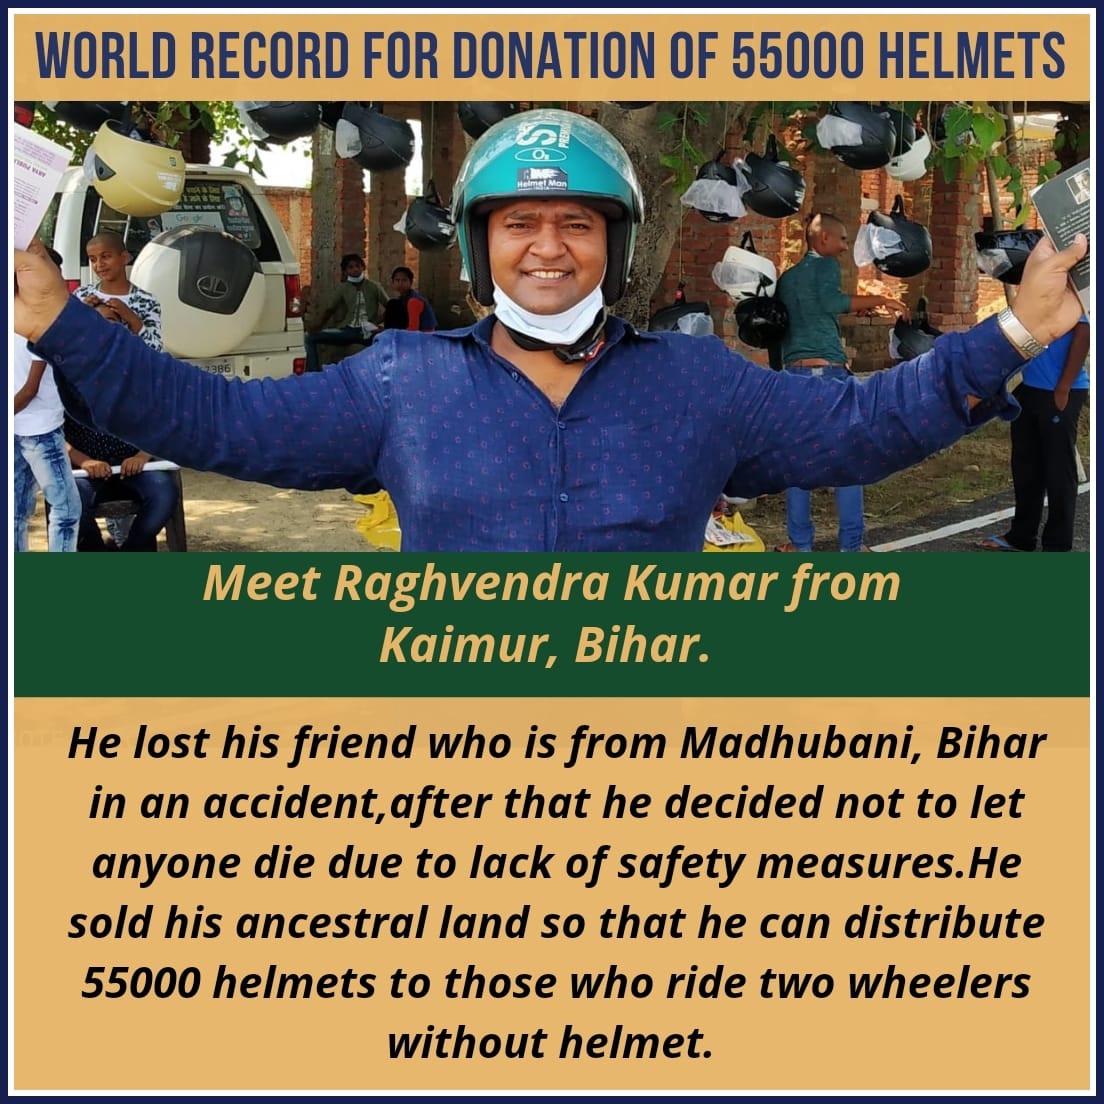 power of Road safety #Helmetman #RoadSafety 
#Raghvendrakumar #sadaksurakshajeevanraksha #Roadsafetyhero free helmet distribution 55000 world record, This is real humanity.
@helmet_man_ .